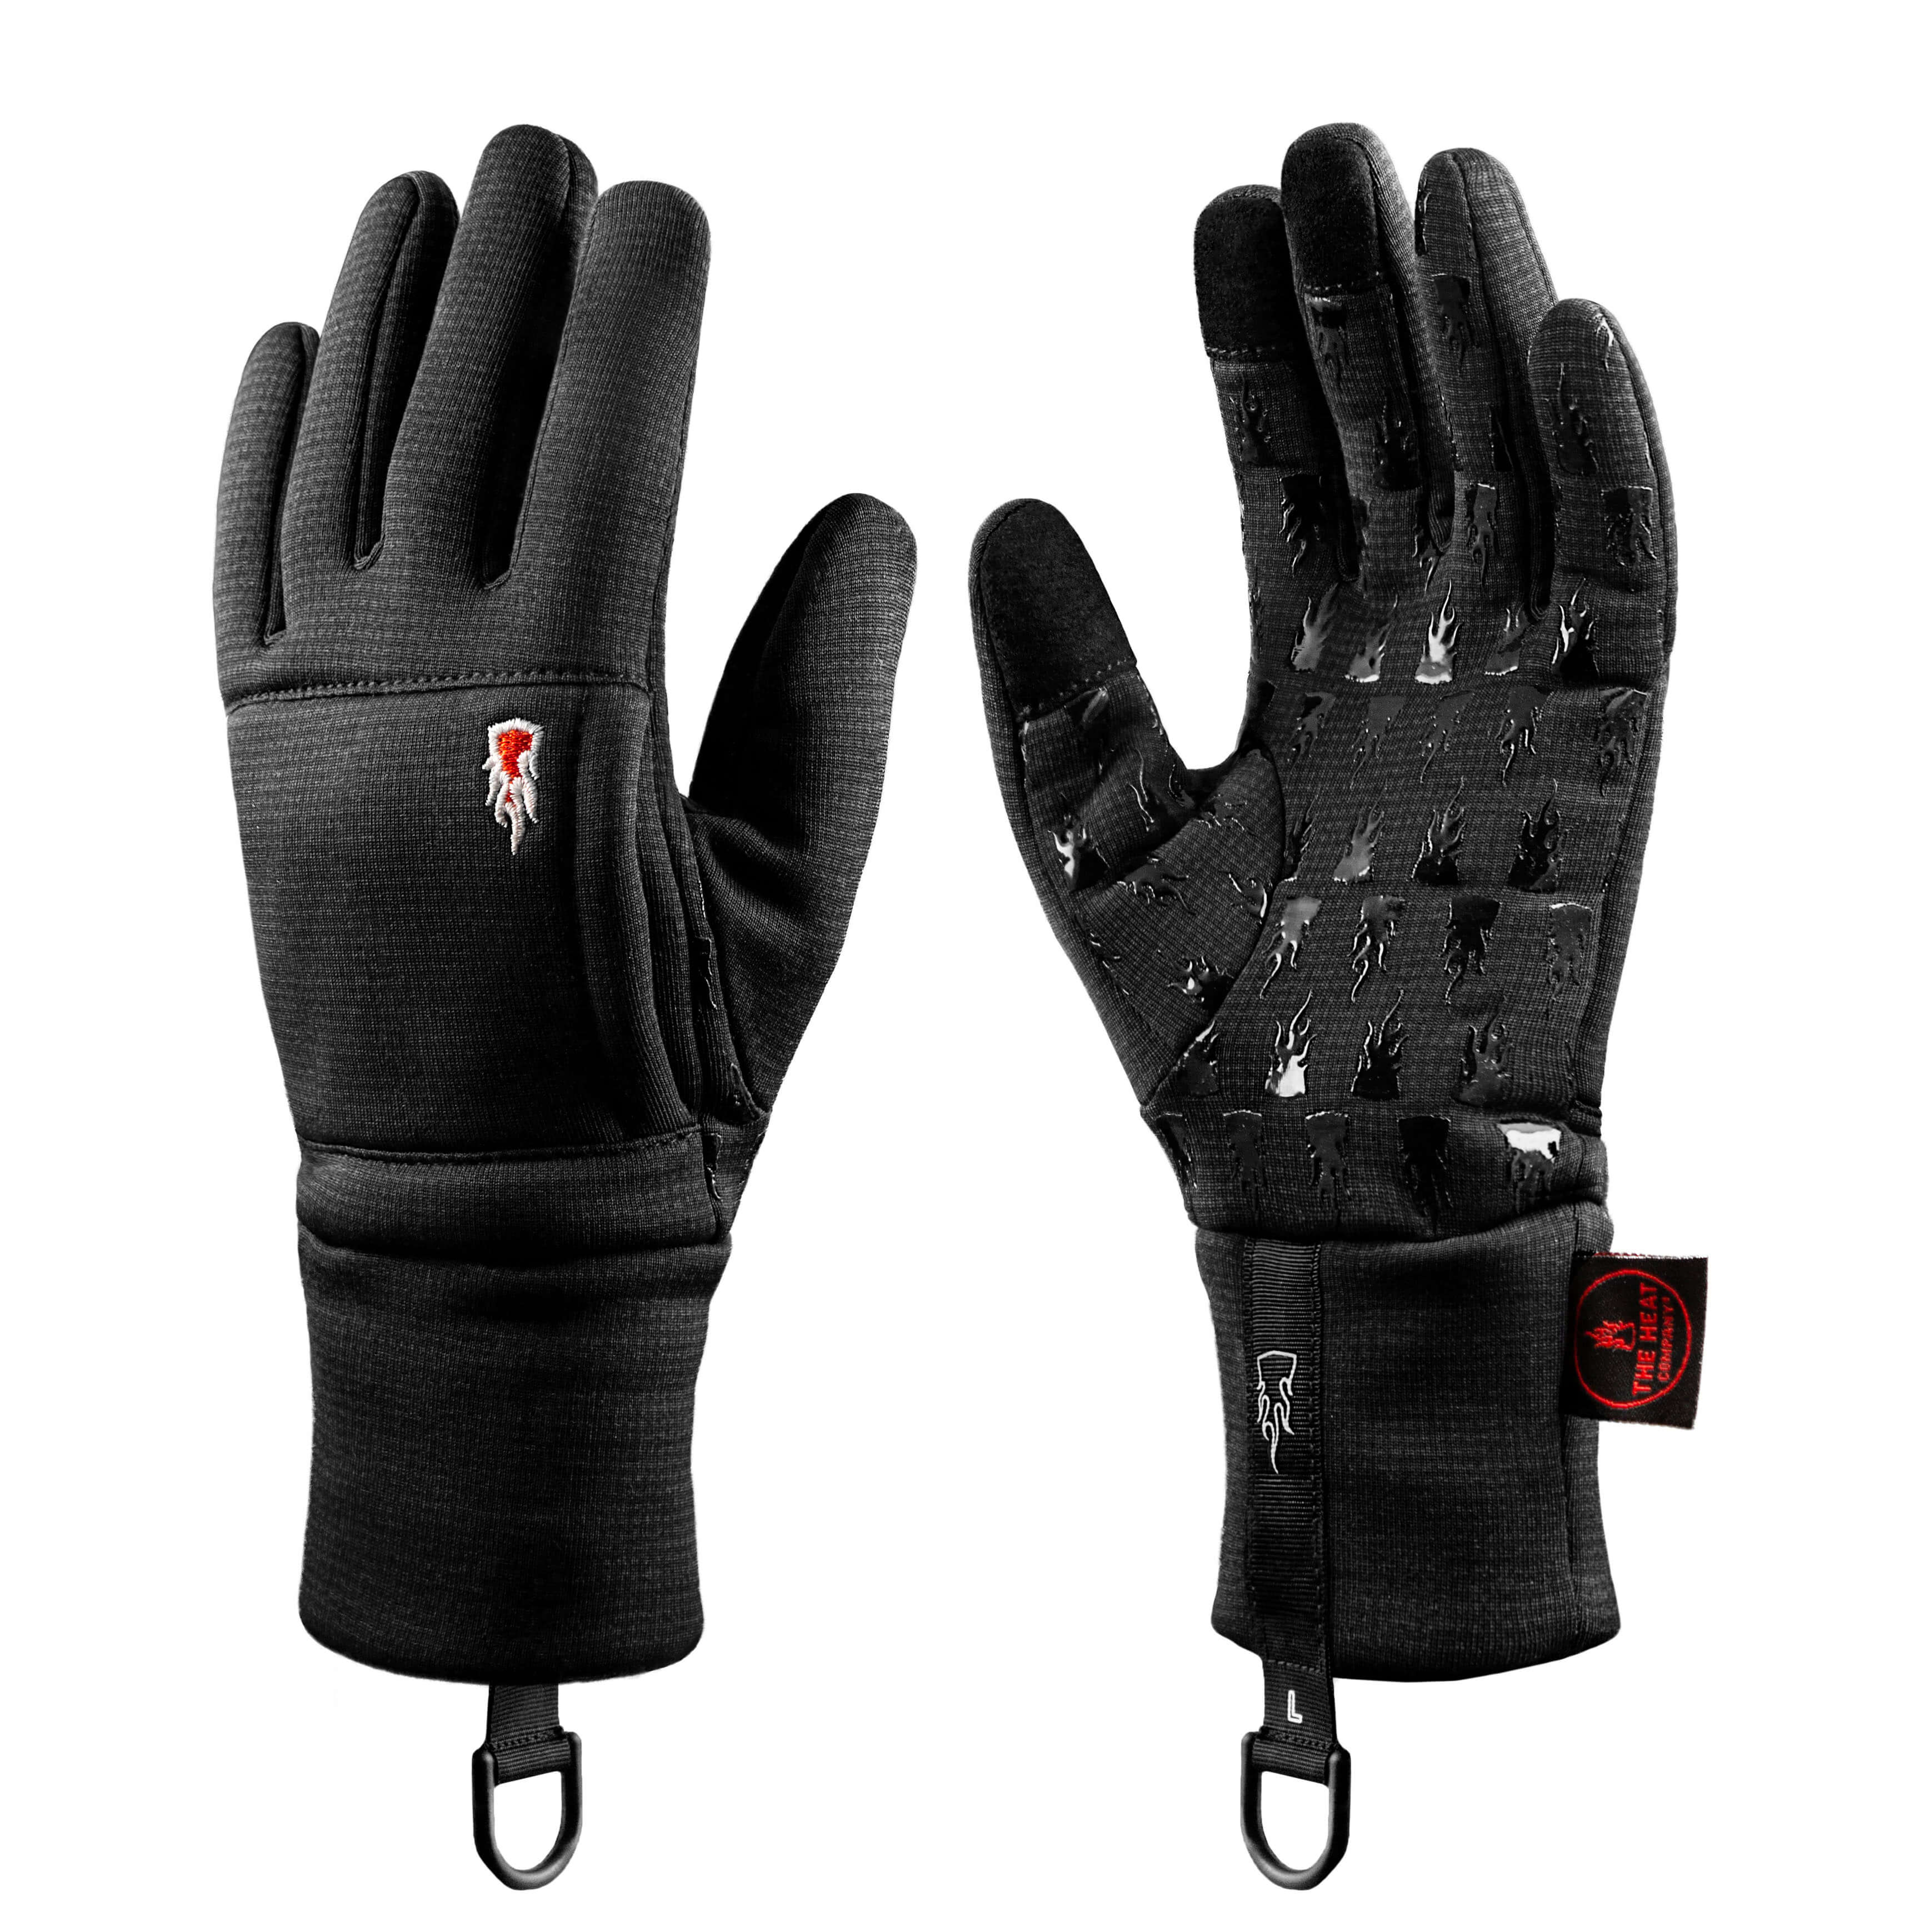 WIND PRO LINER: 1st Layer gloves